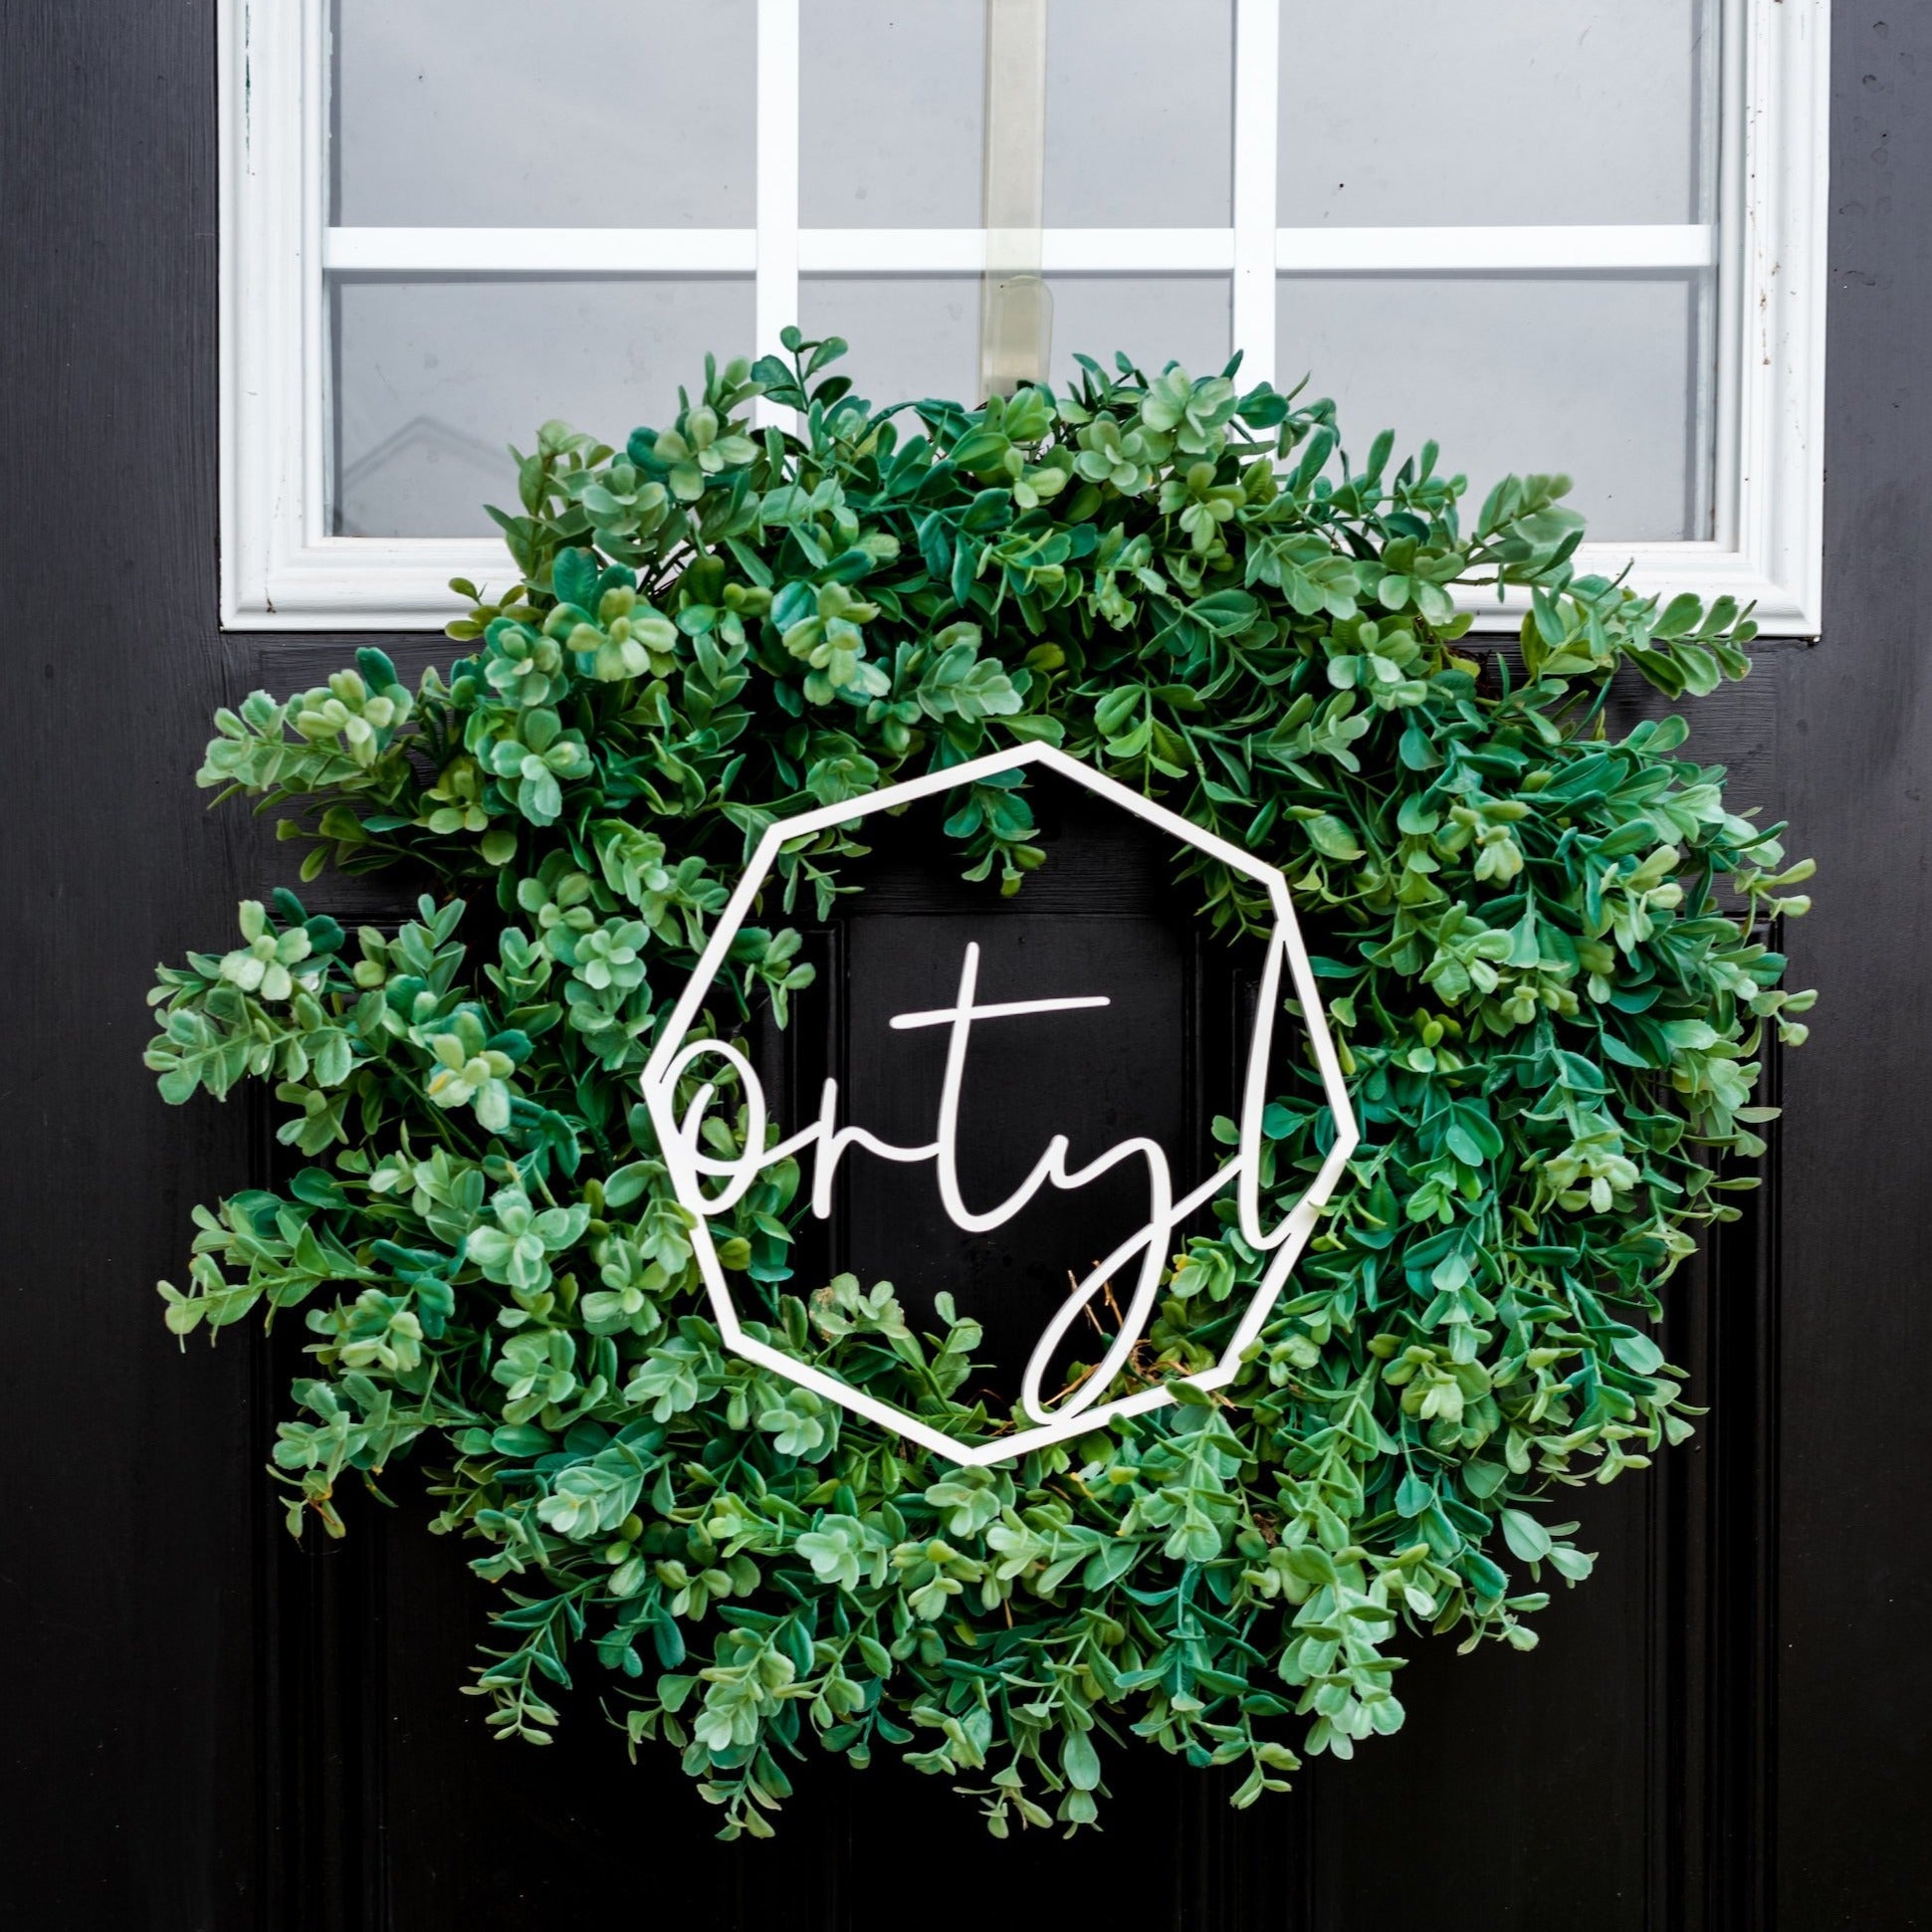 Last Name Wreath Sign - in green wreath on black door by LeeMo Designs in Bend, Oregon